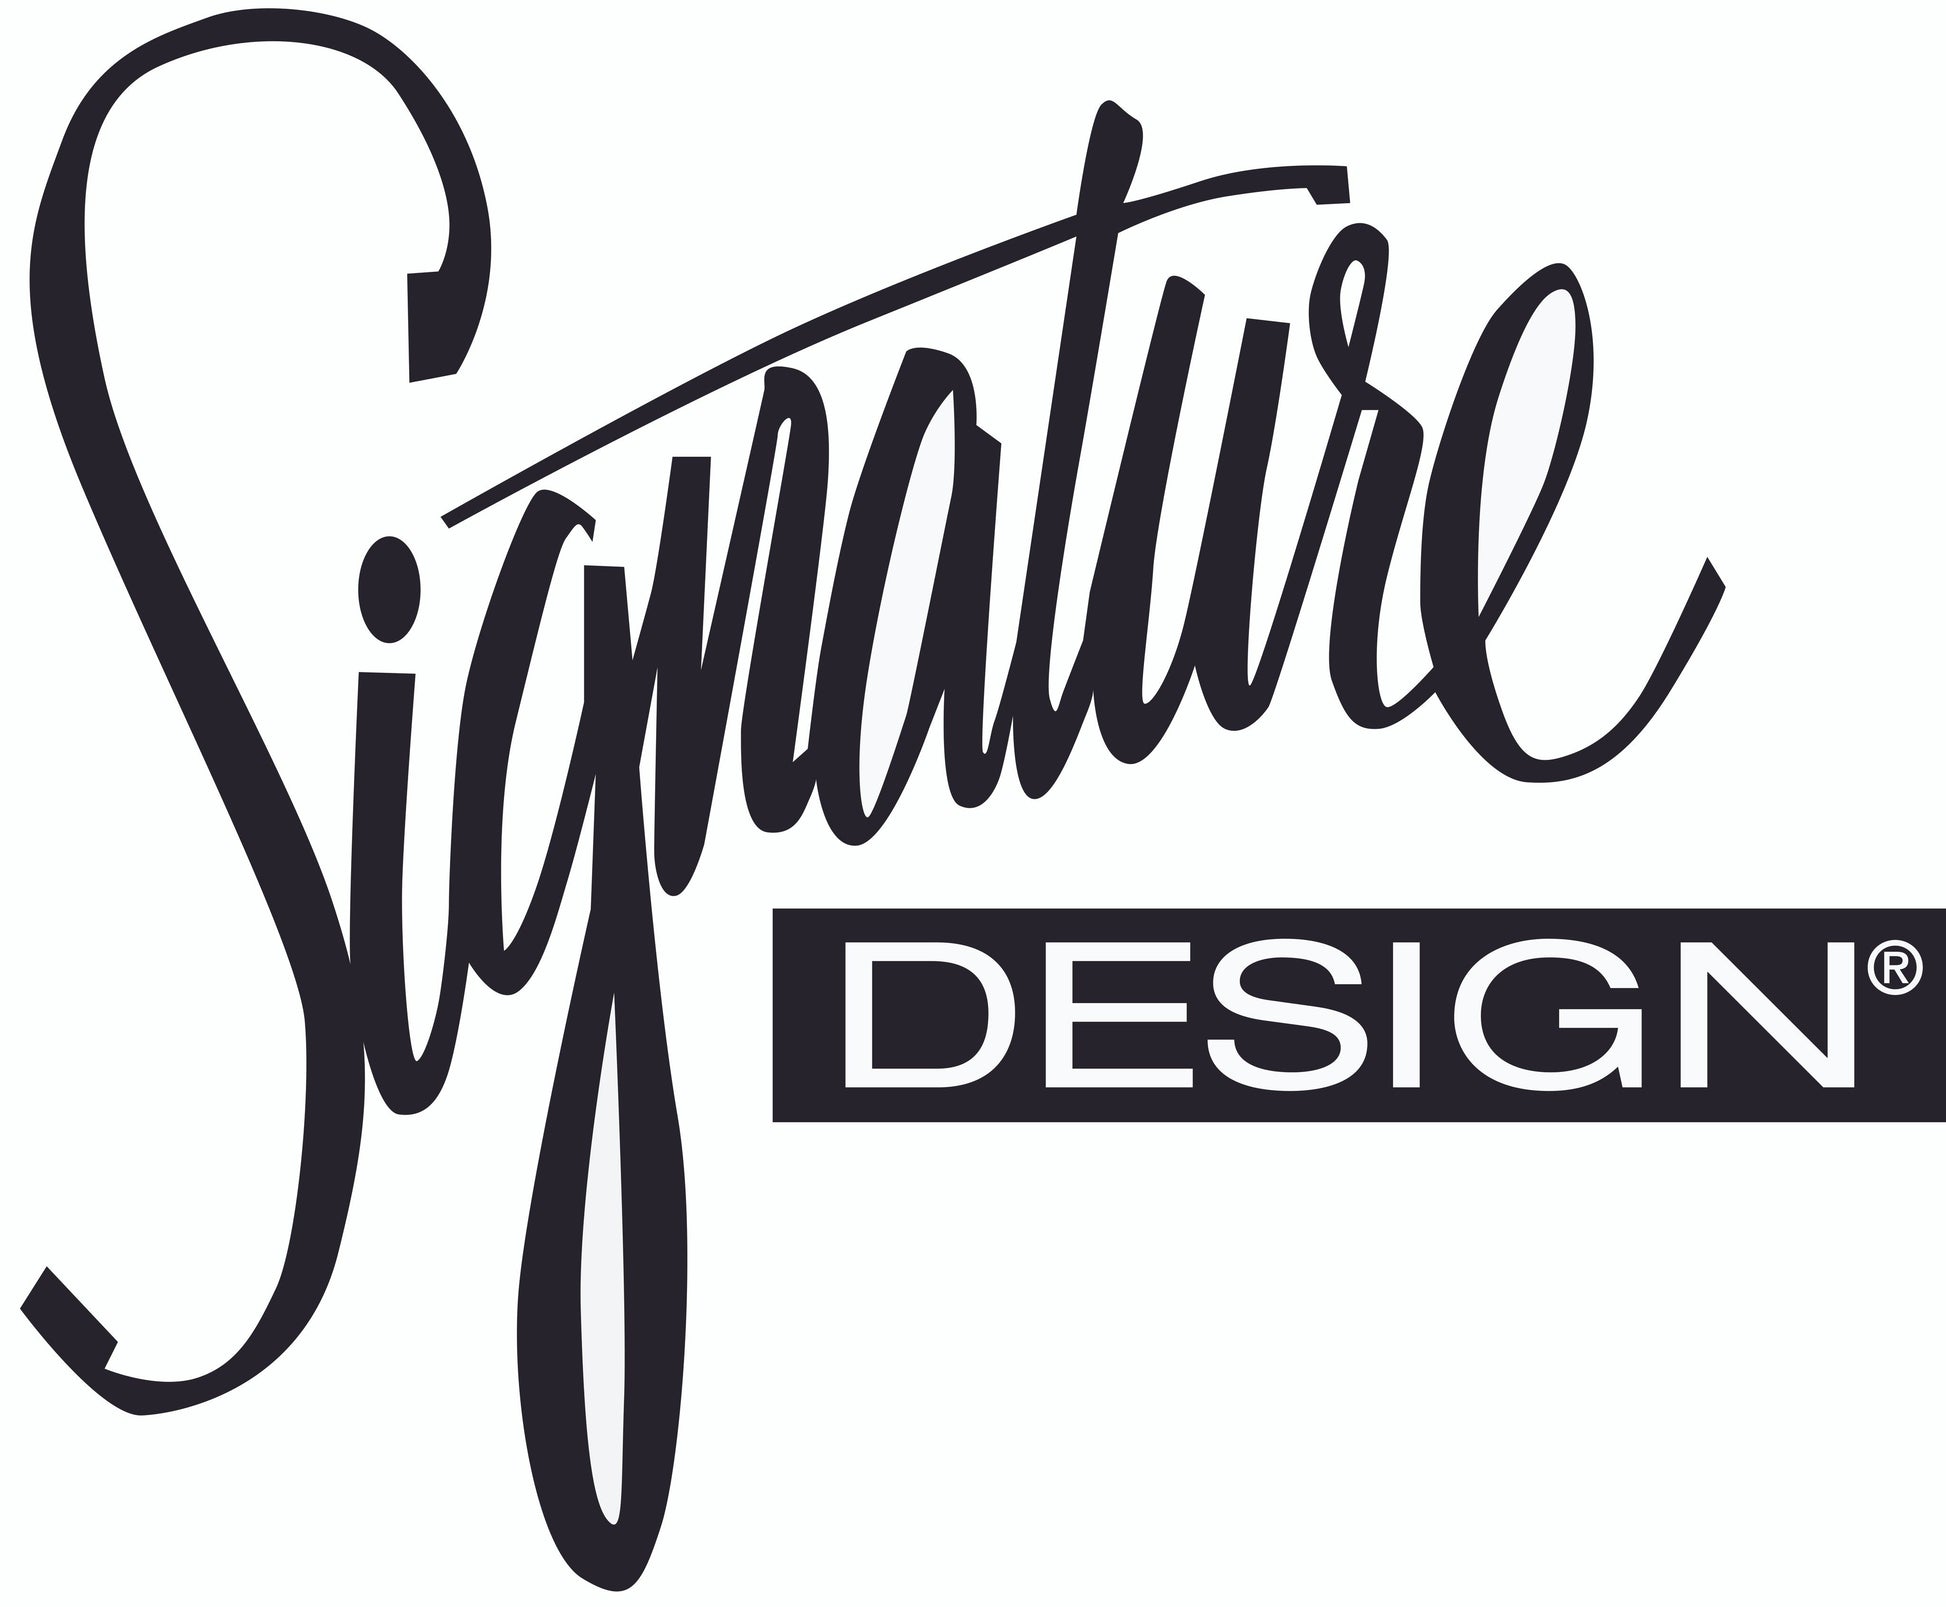 Glosmount Dresser and Mirror Signature Design by Ashley®